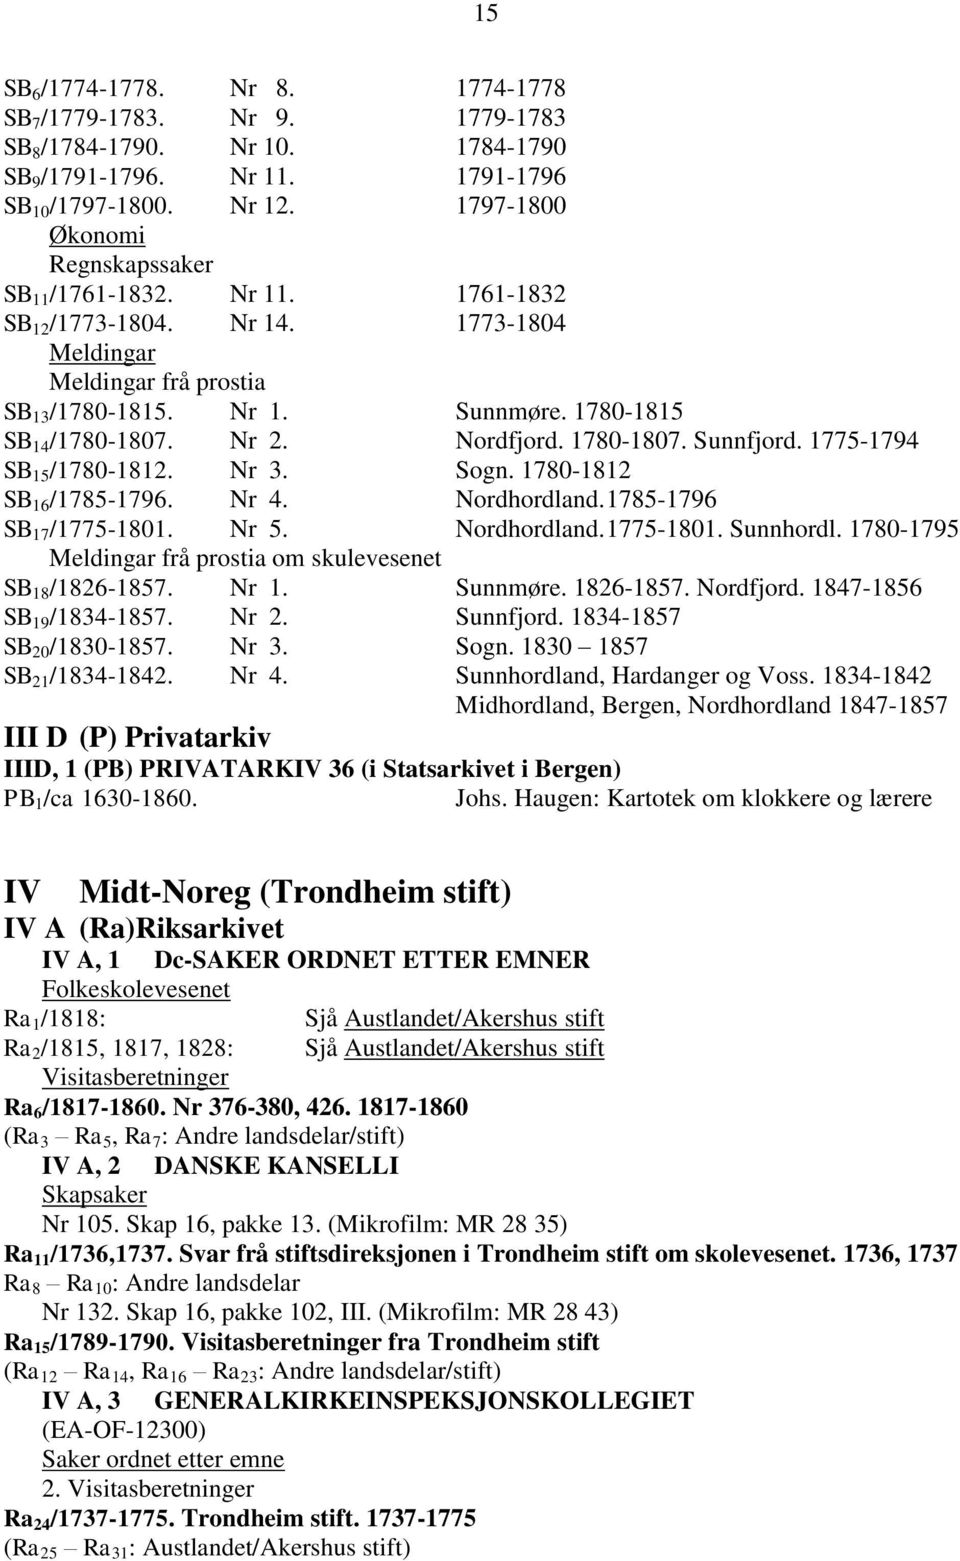 Nr 2. Nordfjord. 1780-1807. Sunnfjord. 1775-1794 SB 15 /1780-1812. Nr 3. Sogn. 1780-1812 SB 16 /1785-1796. Nr 4. Nordhordland. 1785-1796 SB 17 /1775-1801. Nr 5. Nordhordland. 1775-1801. Sunnhordl.